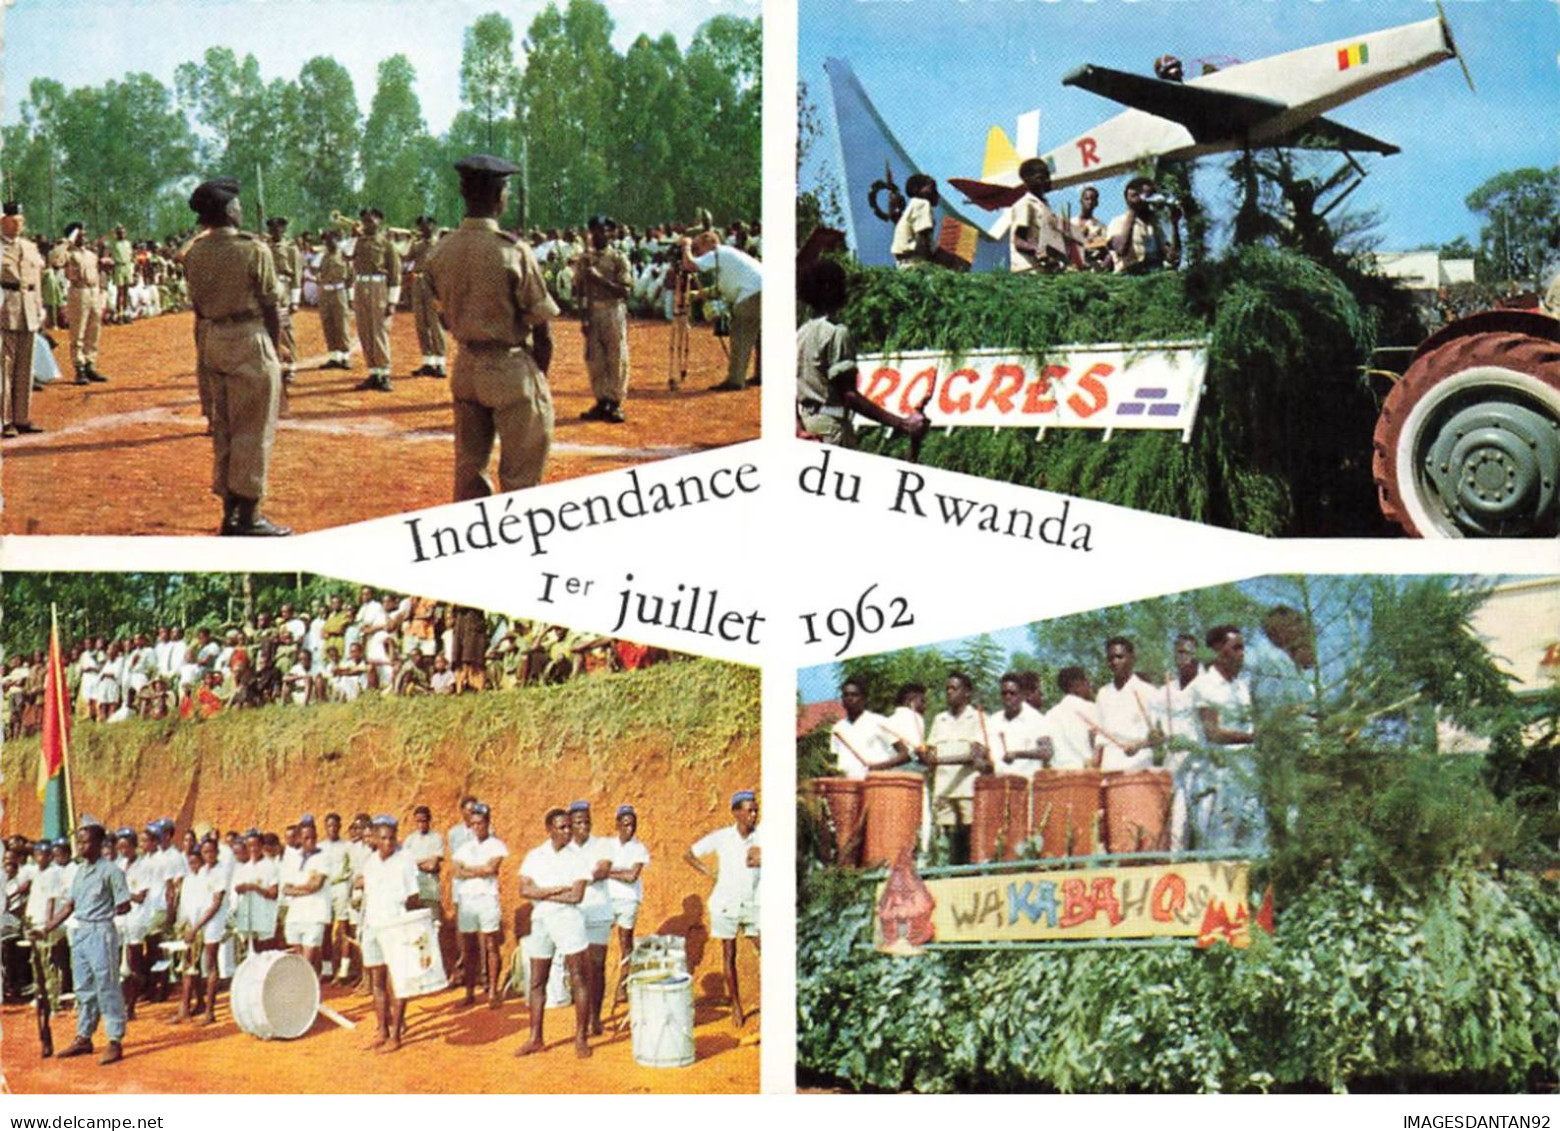 RWANDA AM#DC456 MULTI-VUES INDEPENDANCE DU RWANDA 1 ER JUILLET 1962 CHAR DU PROGRES DE LA LIBERTE TAMBOURS DE KITENKIRO - Rwanda